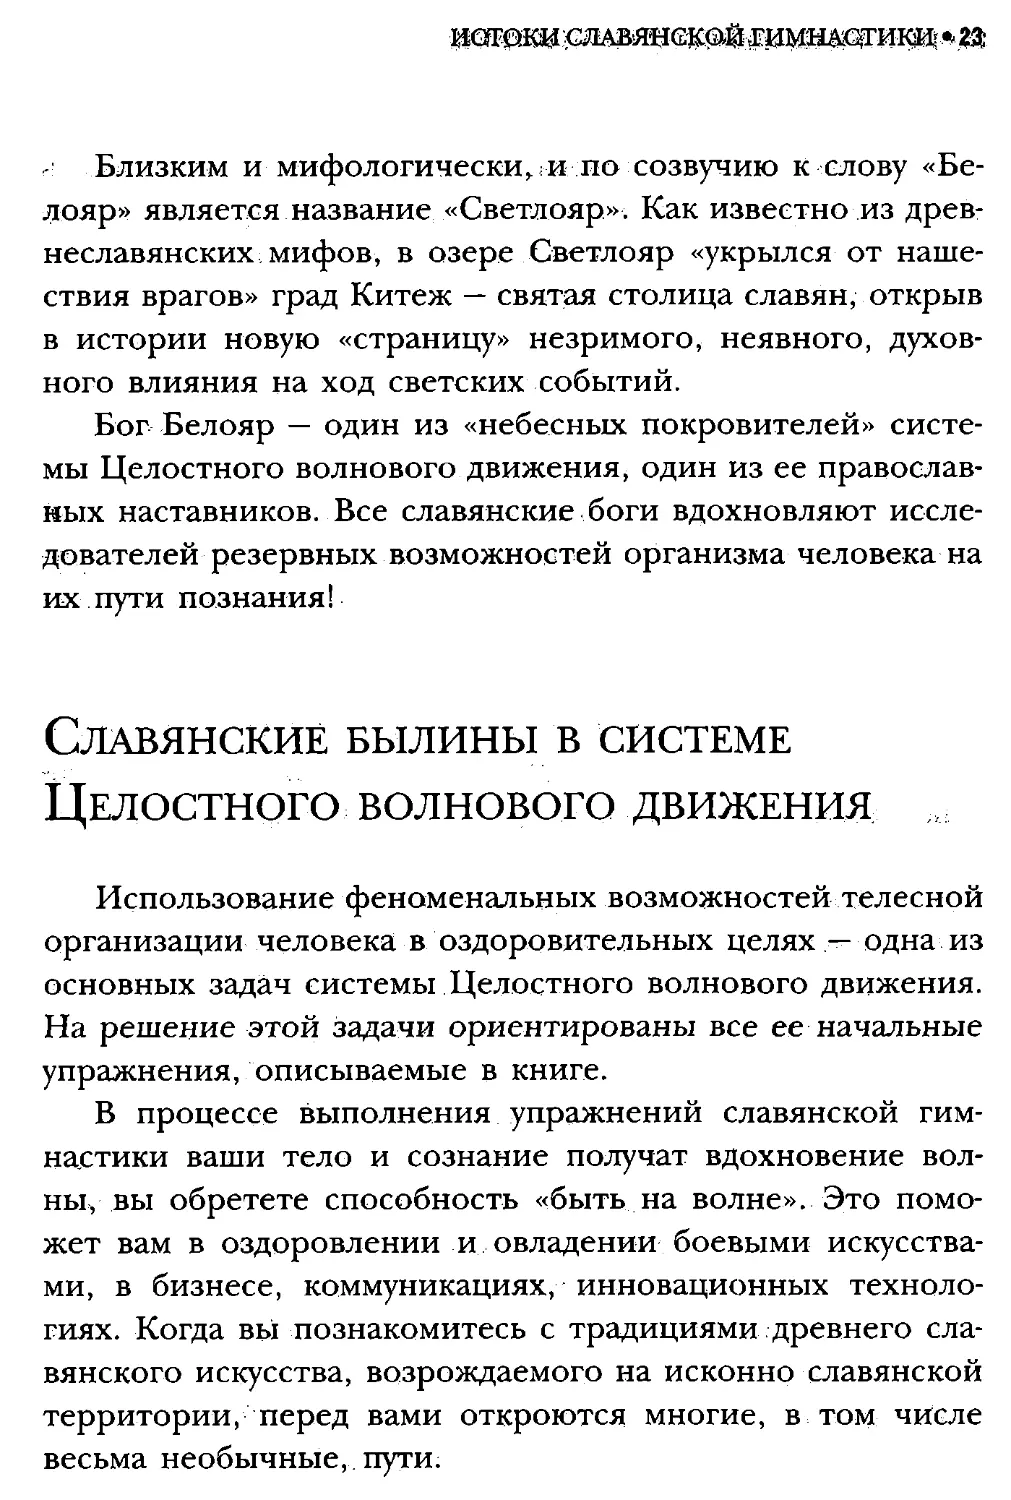 ﻿СлавянеТекст_page0011_2